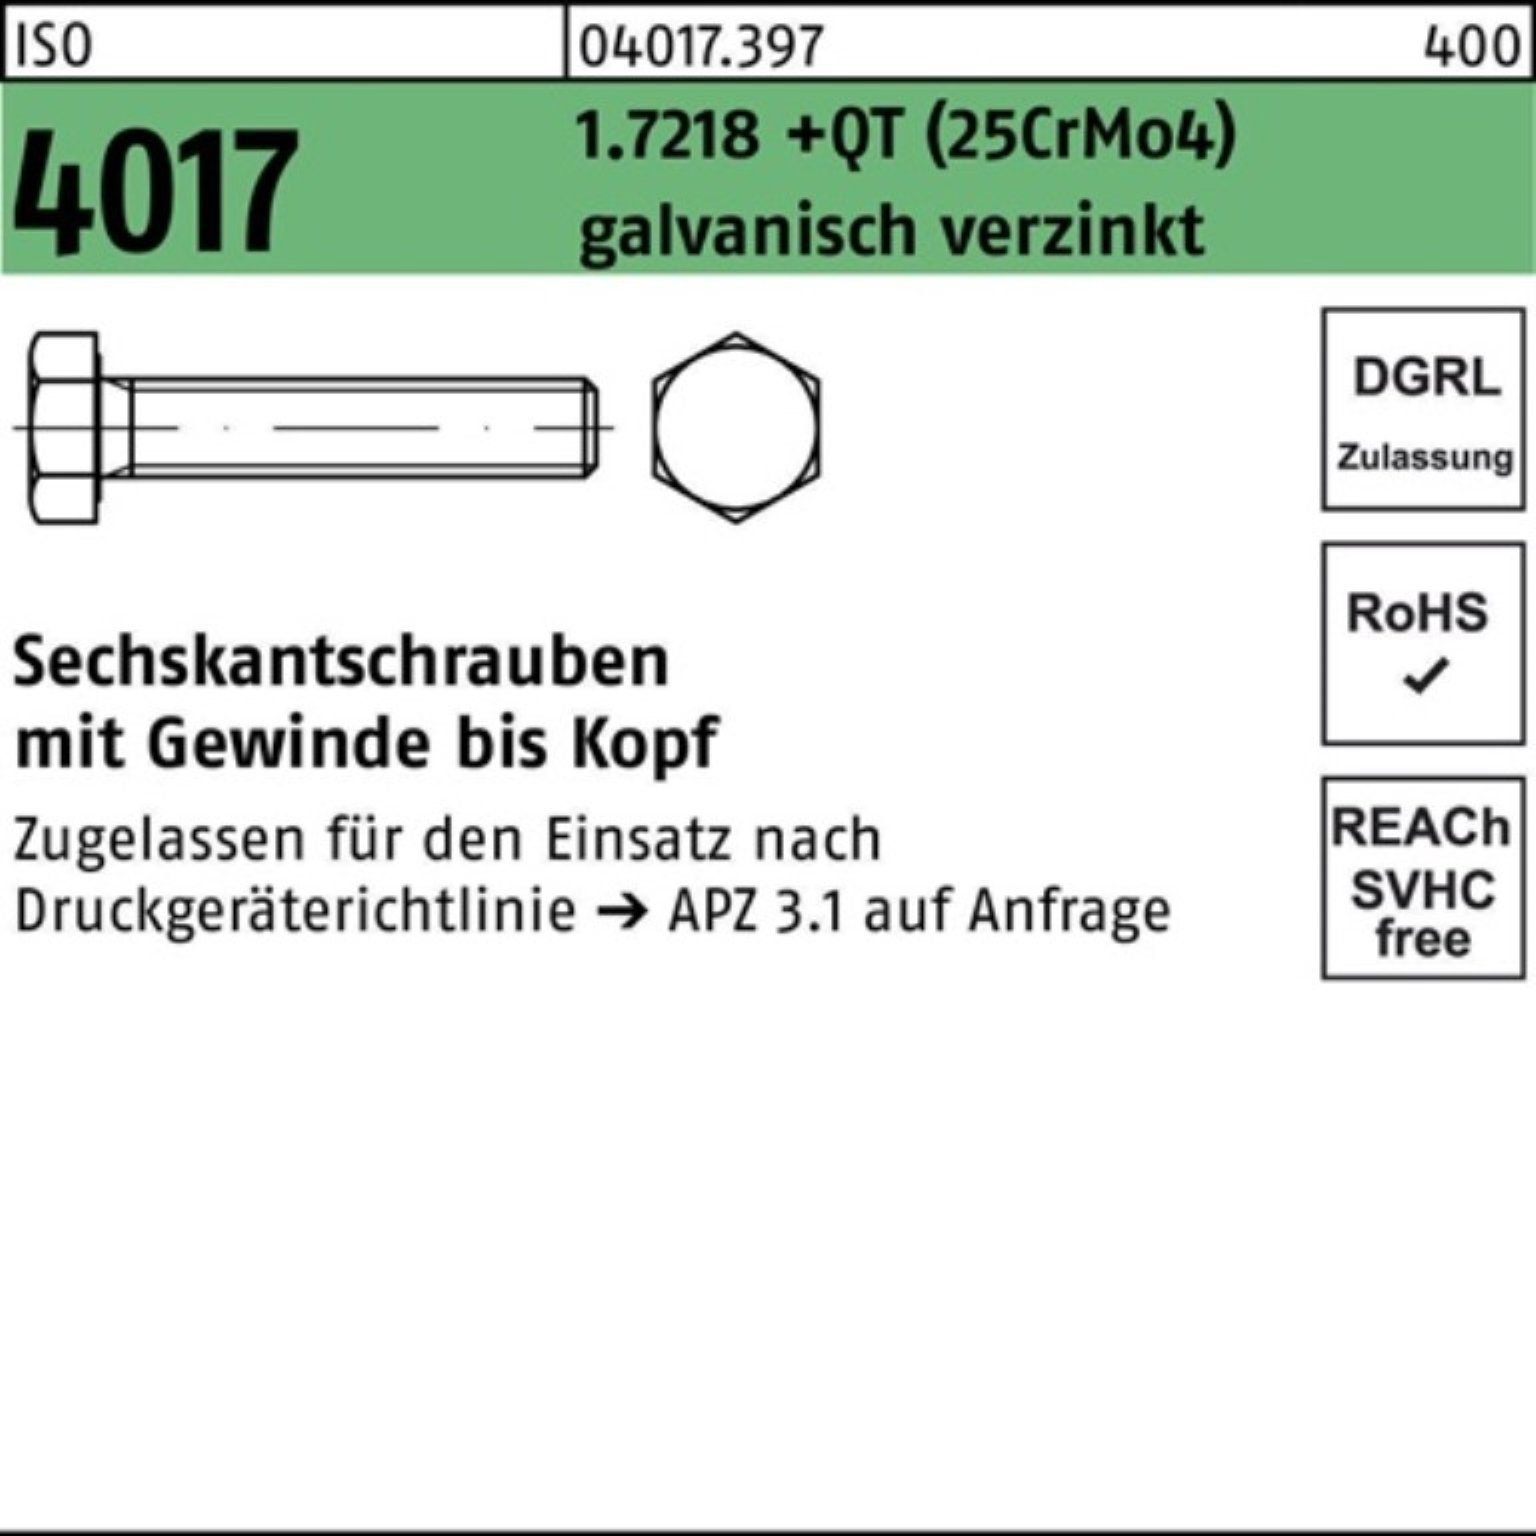 100er Sechskantschraube Pack M30x65 (25CrMo4) 1.7218 4017 Sechskantschraube +QT g VG ISO Bufab